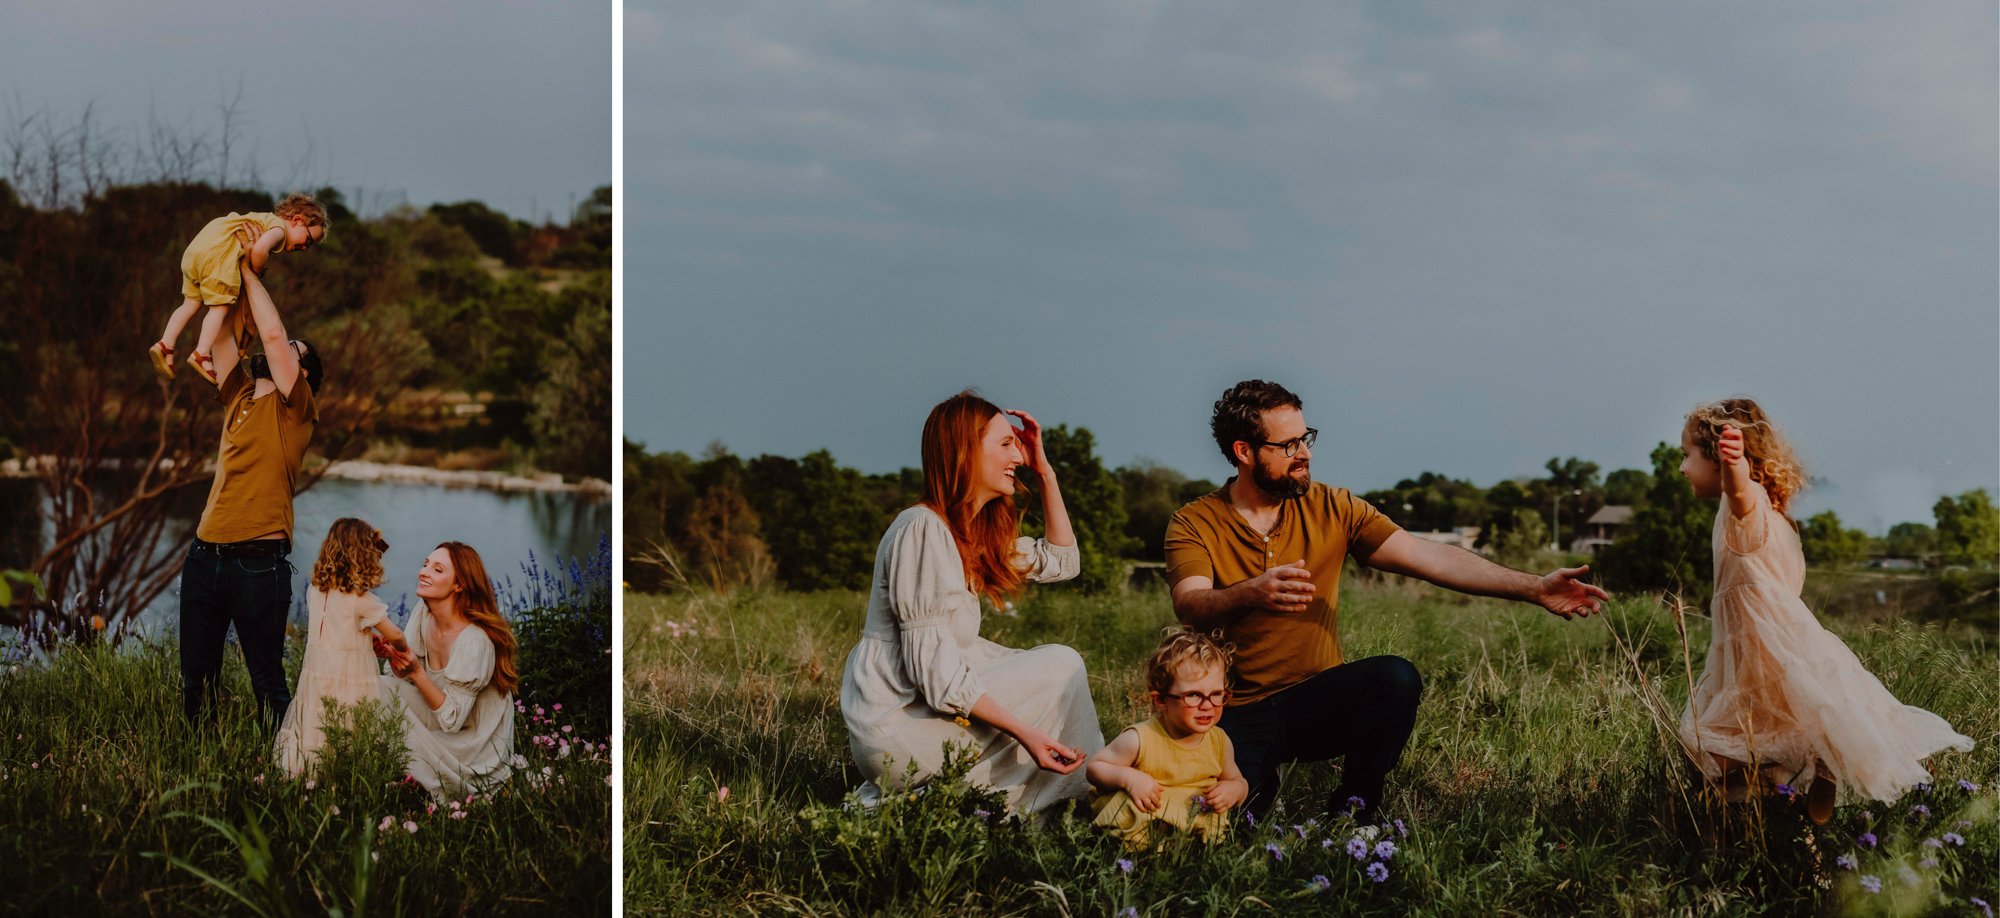 Austin wildflower photos with family